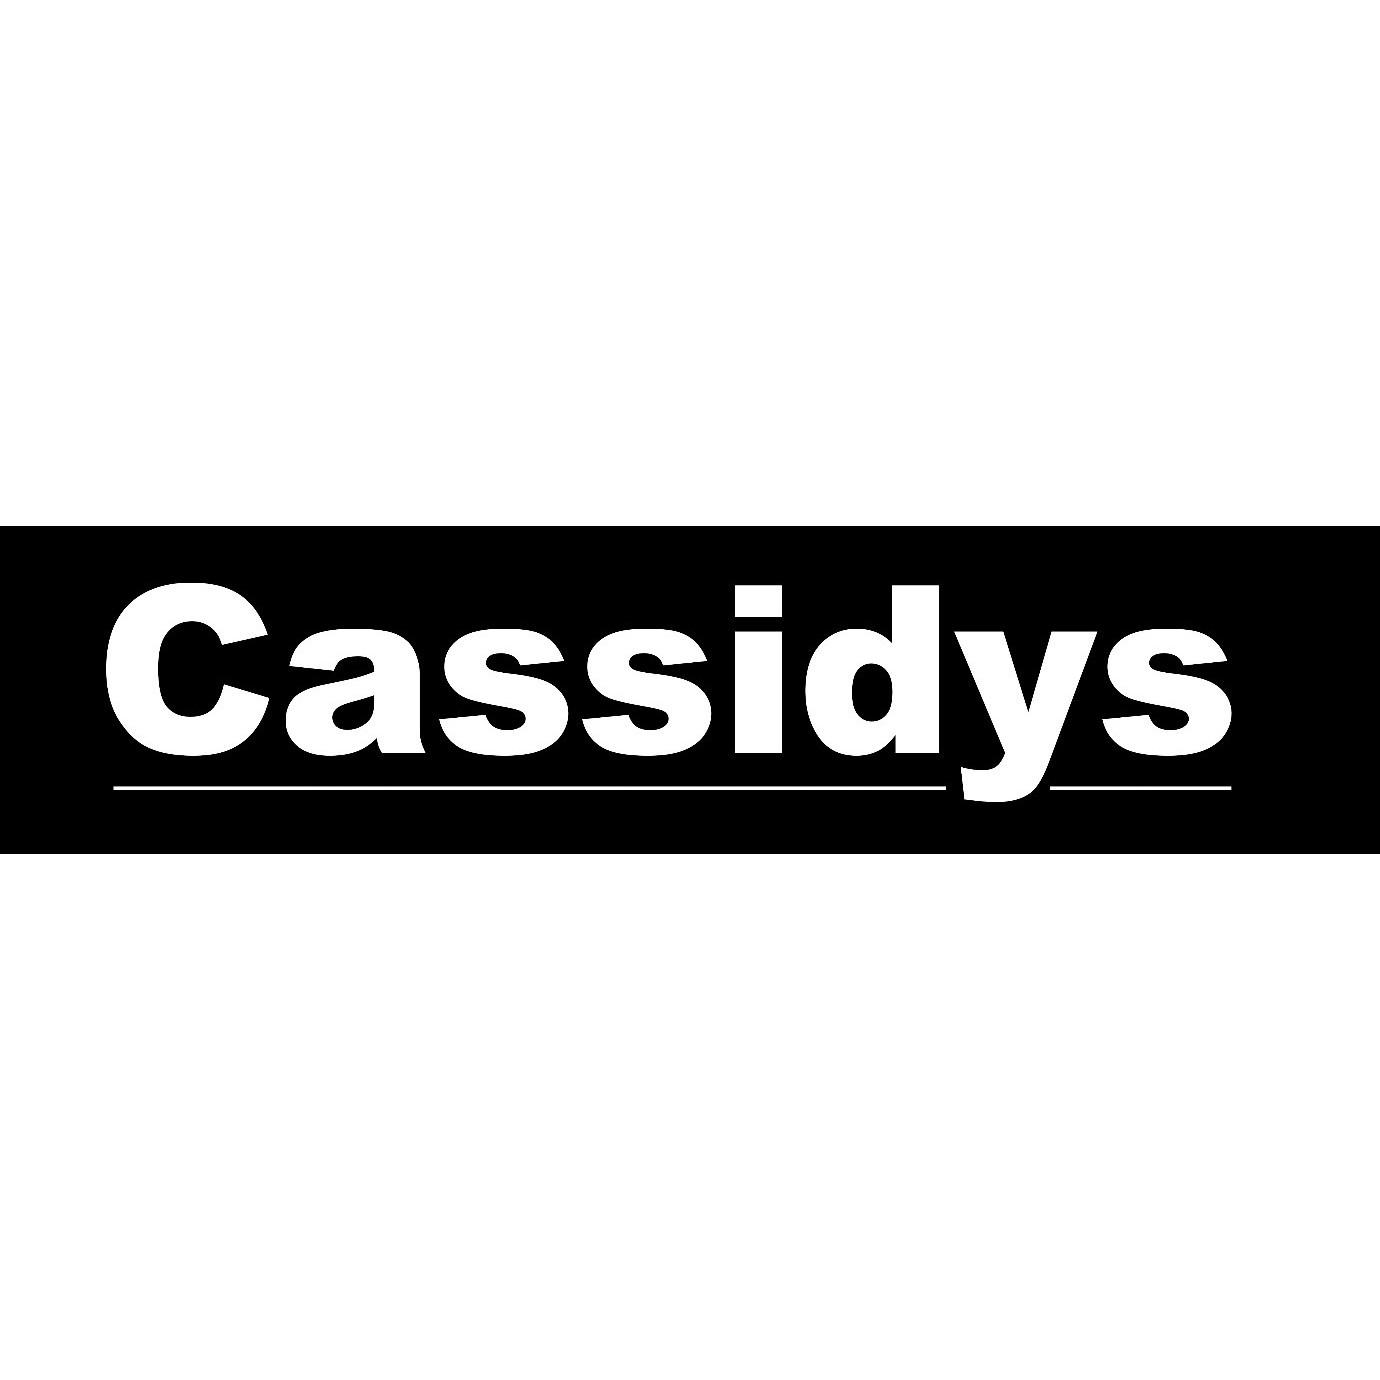 Cassidys Department Store - Macquarie, ACT 2614 - (02) 6251 1911 | ShowMeLocal.com